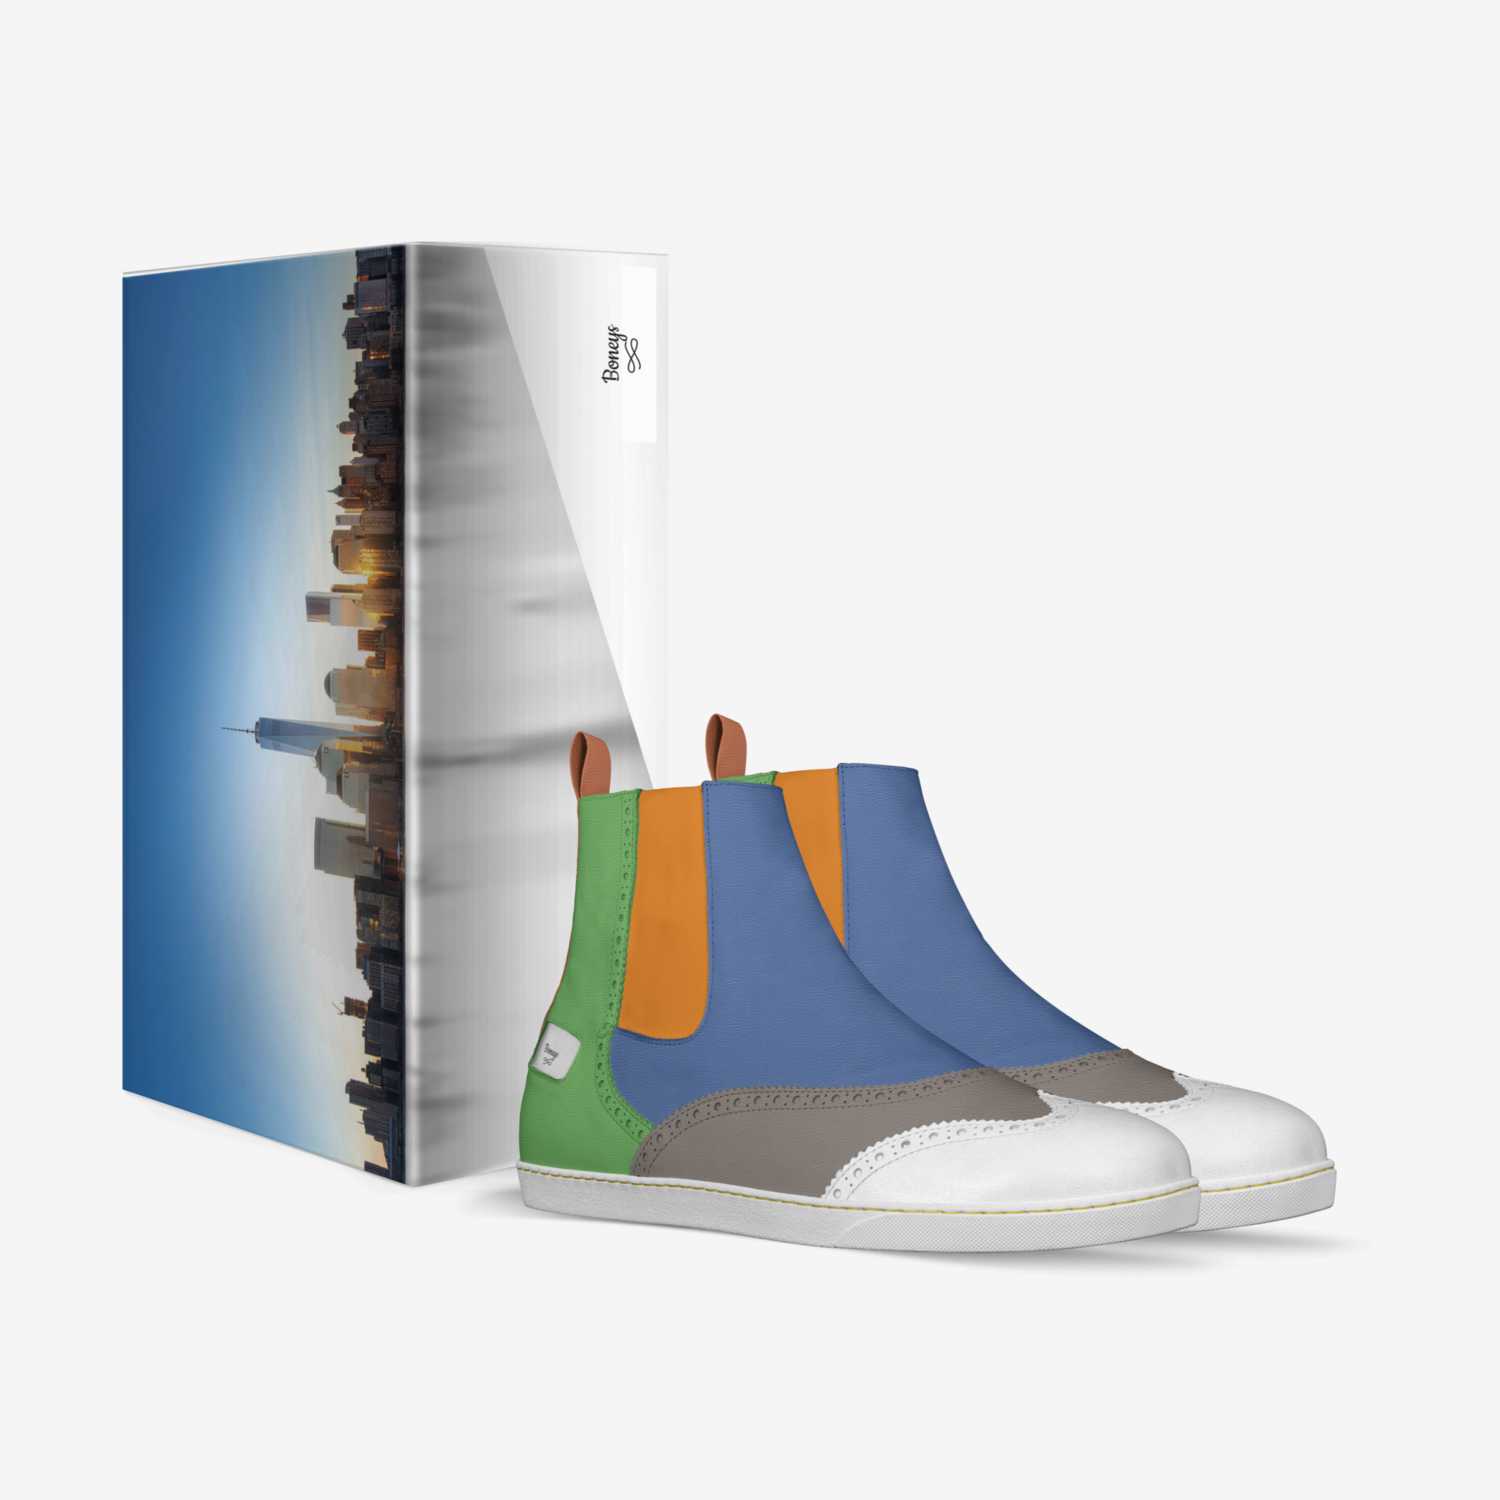 Boneys custom made in Italy shoes by Kyle Boney | Box view